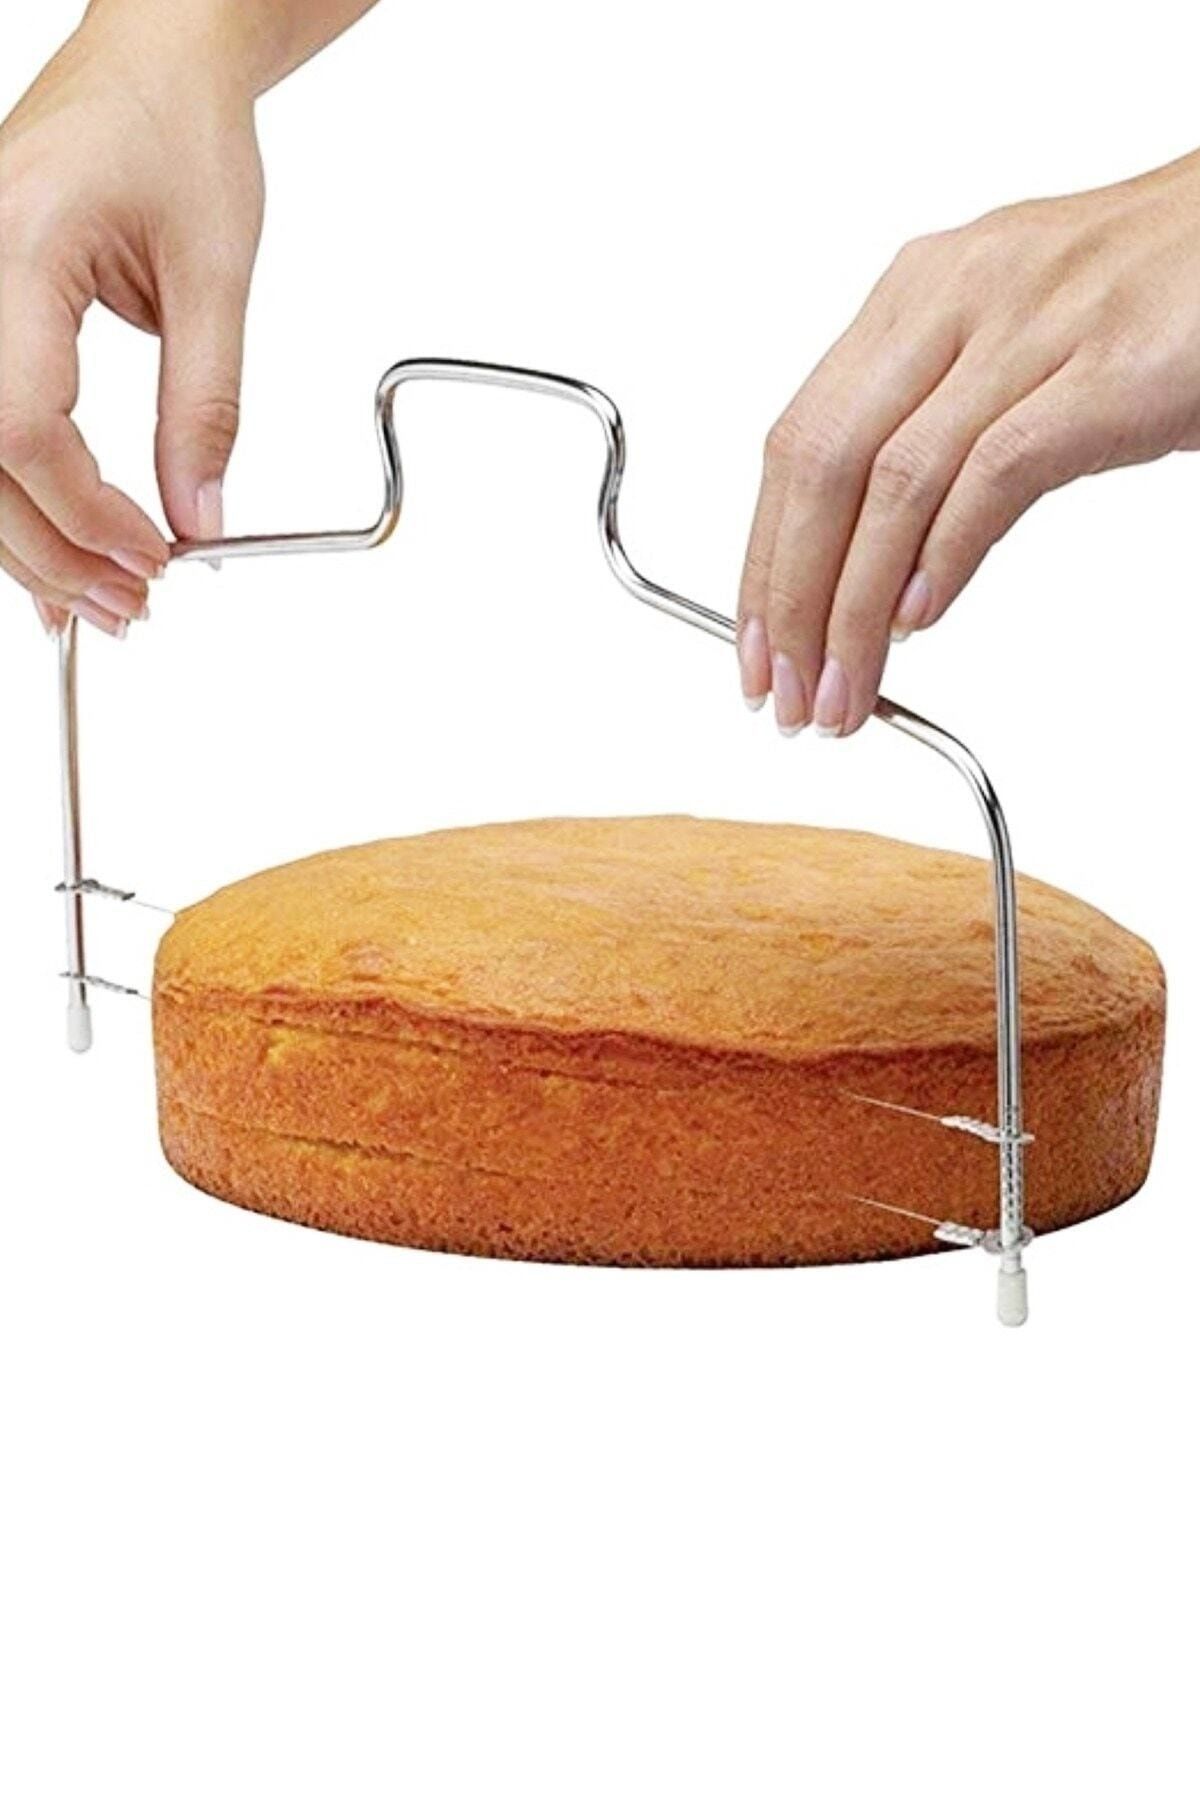 SİLİCA Pasta Keki Dilimleyicisi